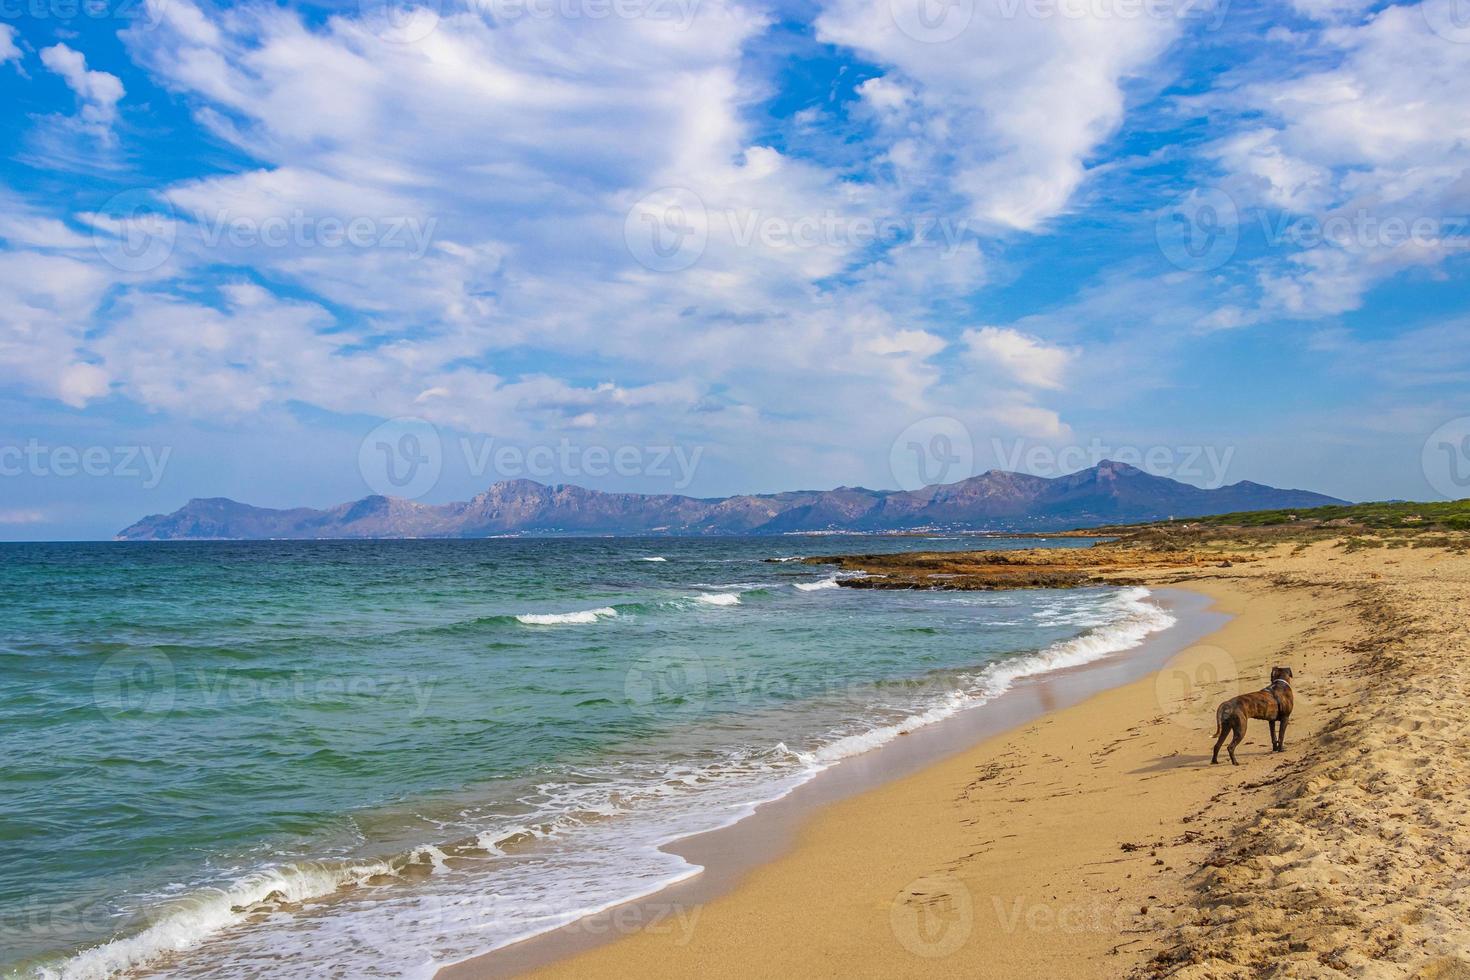 hund vid kusten strand landskap panorama can picafort mallorca spanien. foto